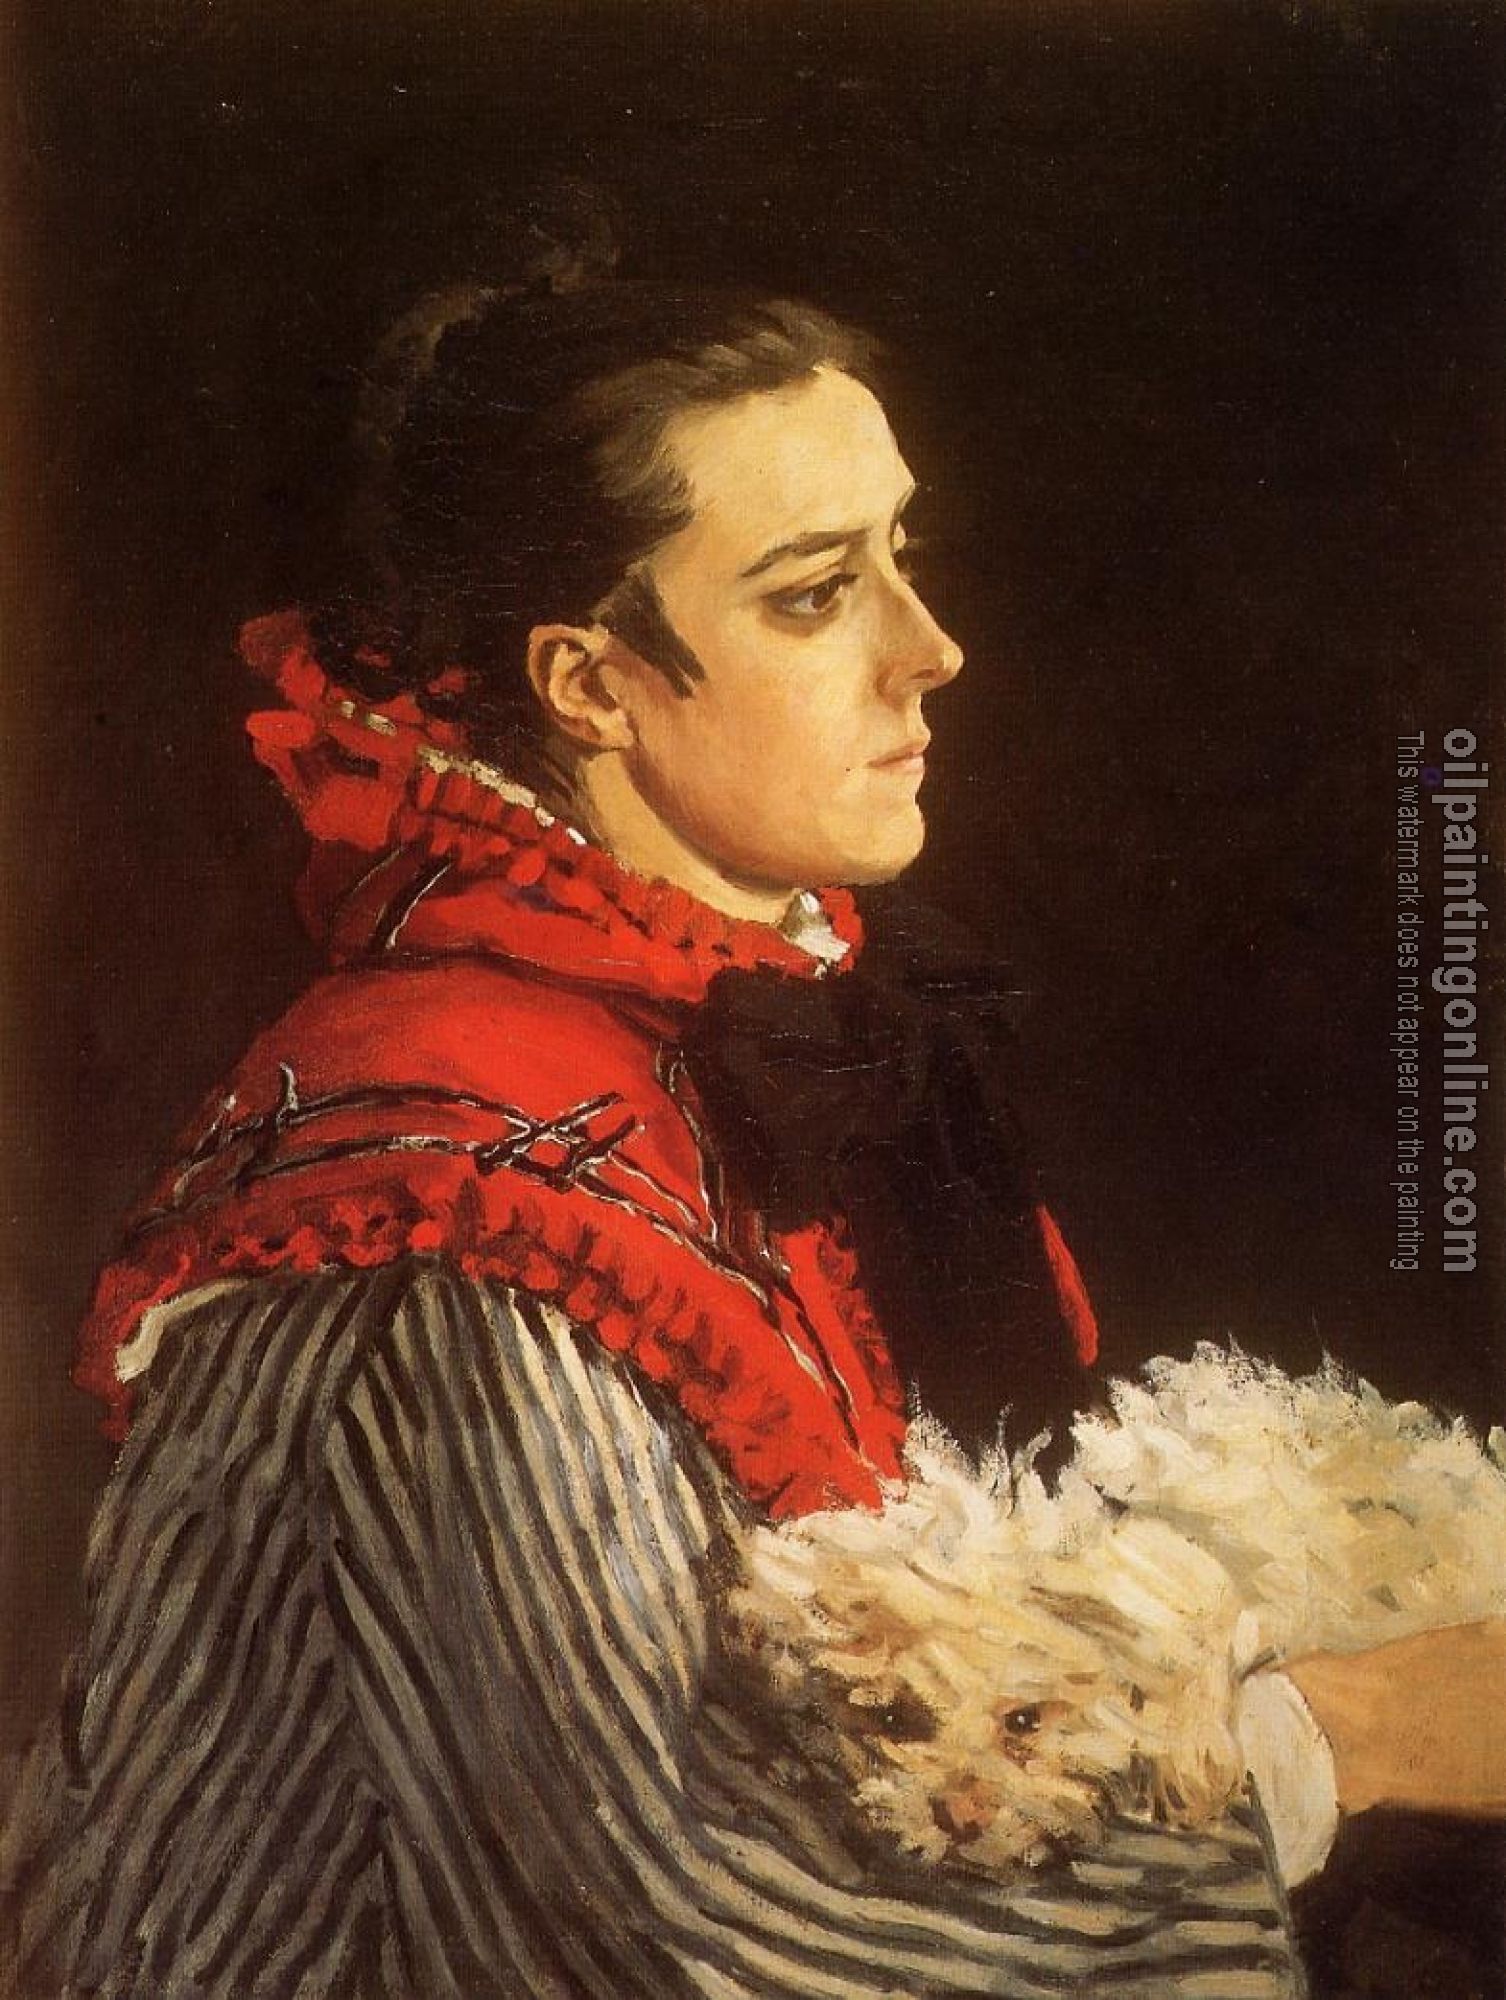 Monet, Claude Oscar - Camille with a Small Dog